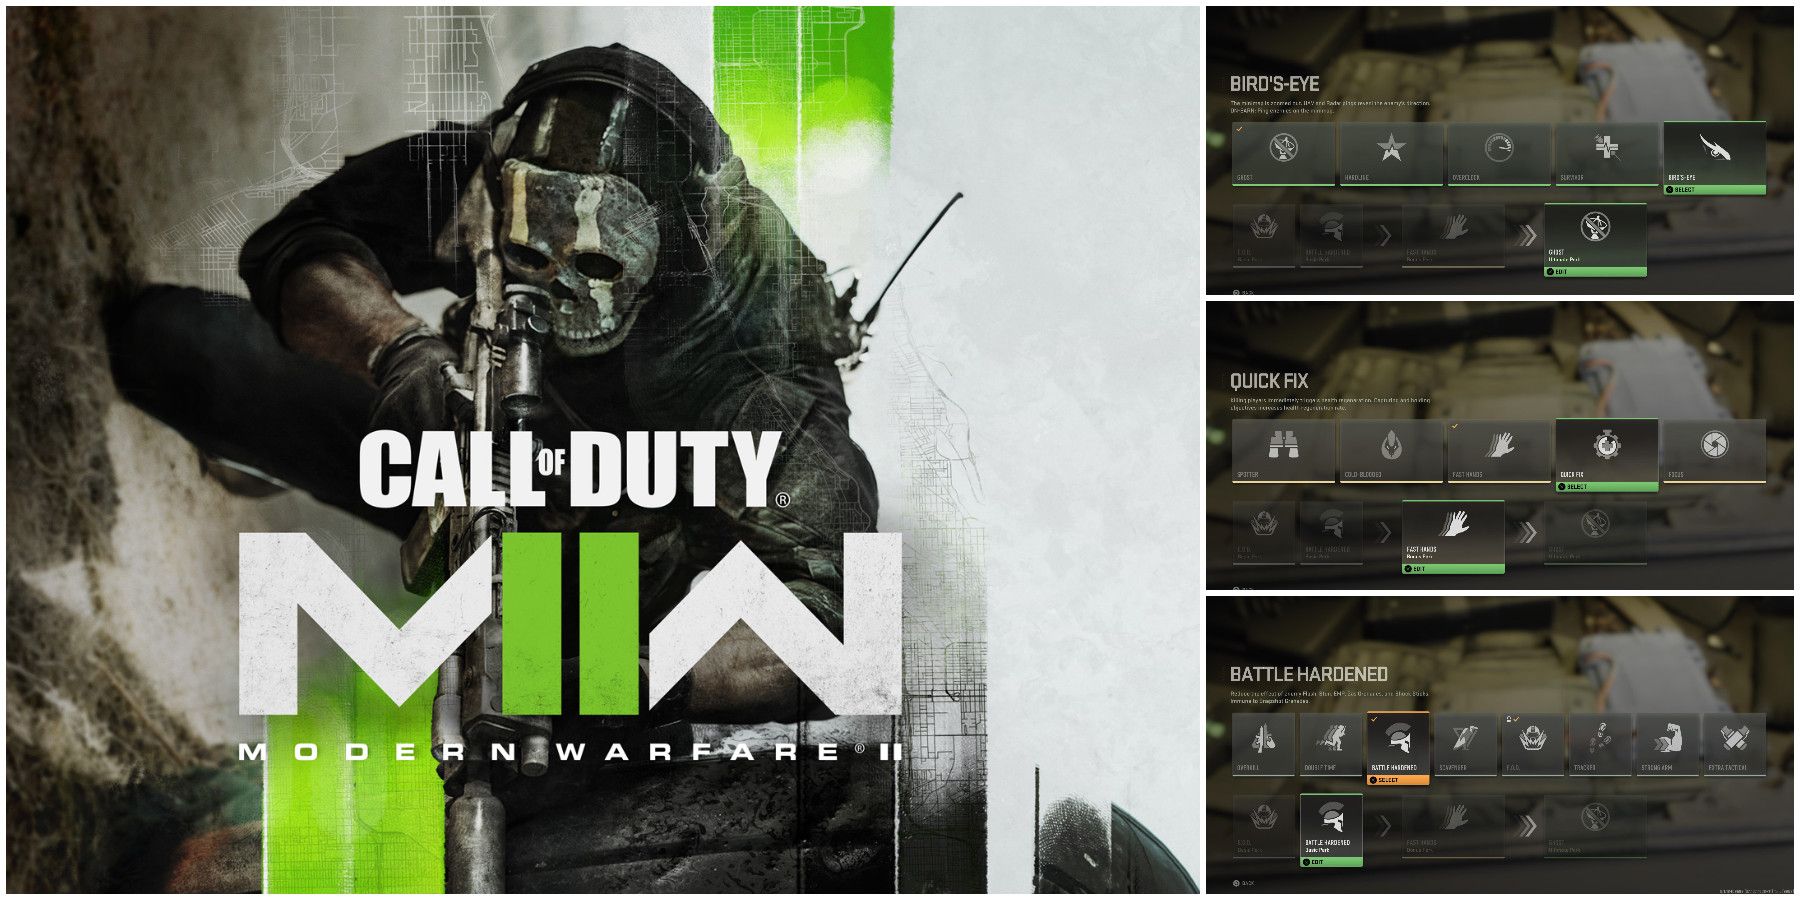 Call of Duty Modern Warfare 2 Beta Perks